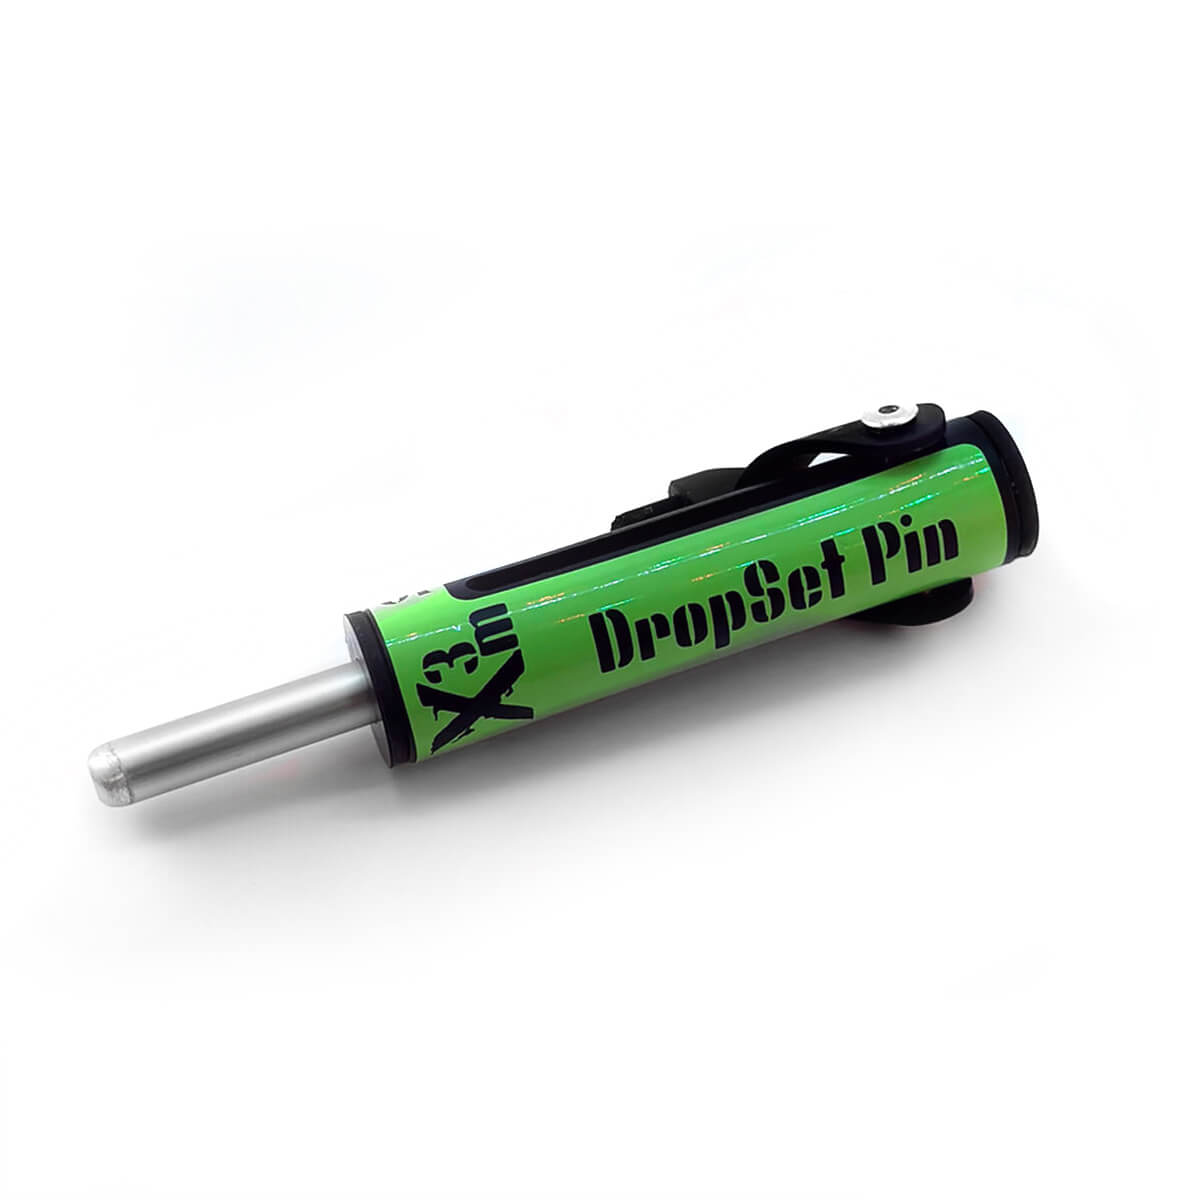 DropSet Pin, 10 mm, X3M Brands